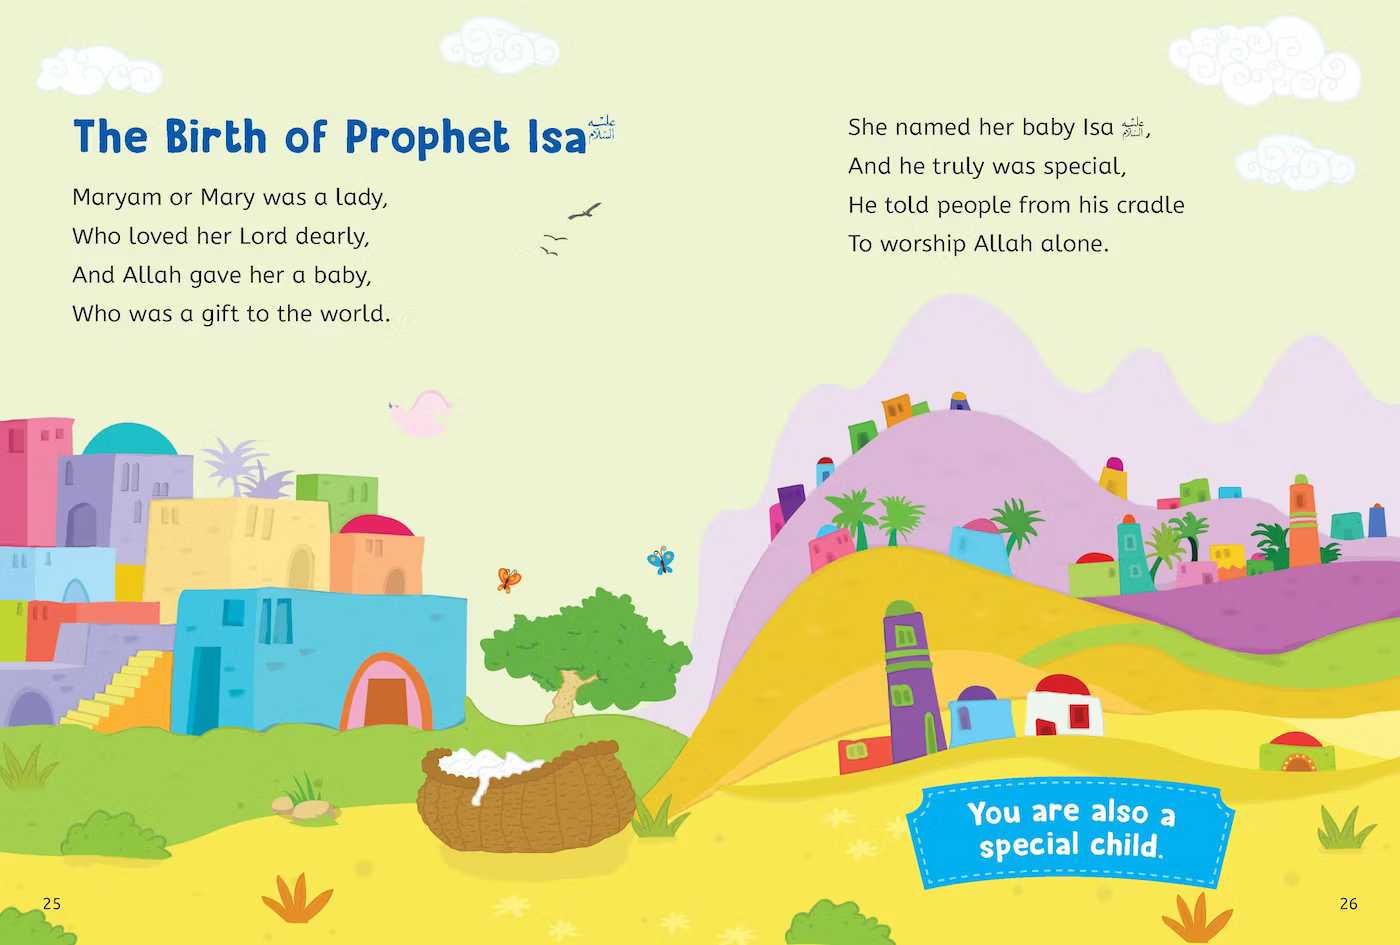 Baby's First Quran Stories: By Saniyasnain Khan - Goodword